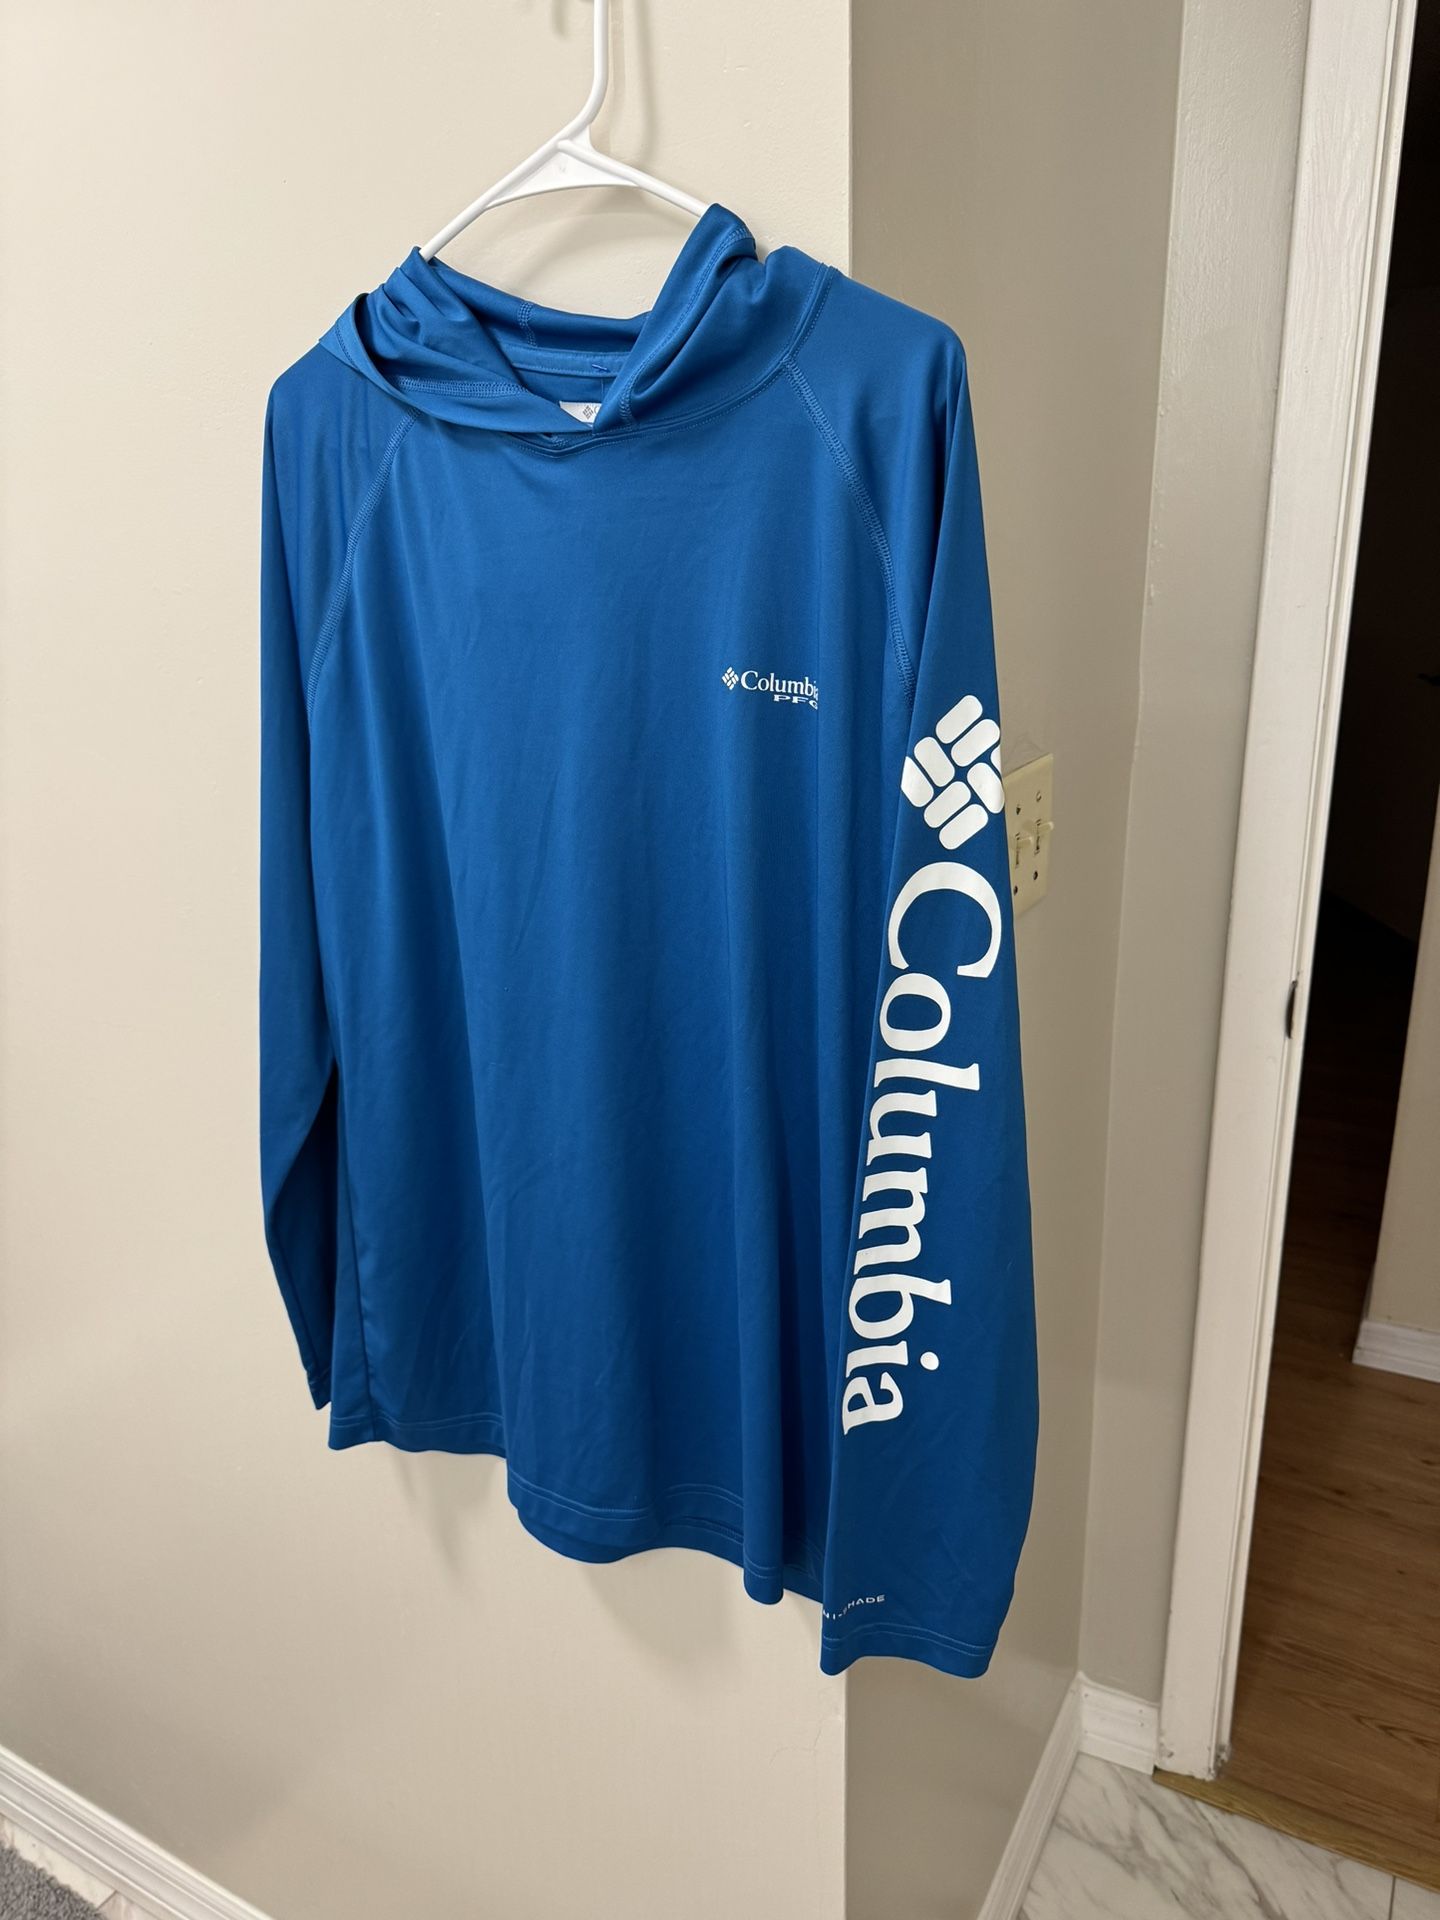 Columbia Shirt (GREAT PRICE)